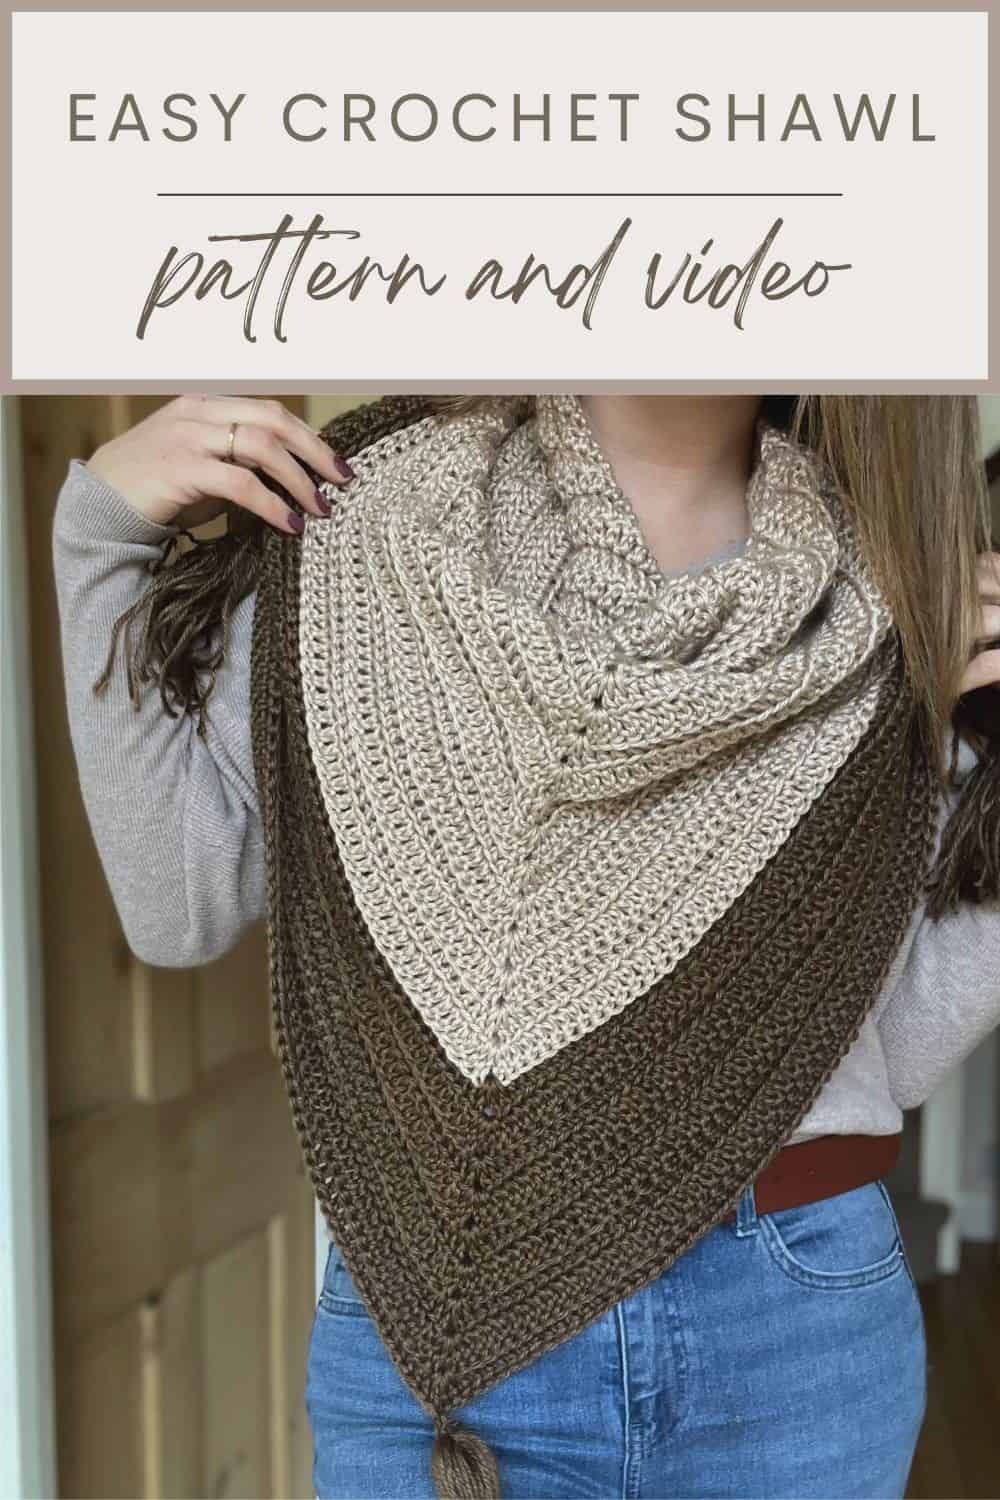 Easy crochet triangle shawl pattern with tassels.